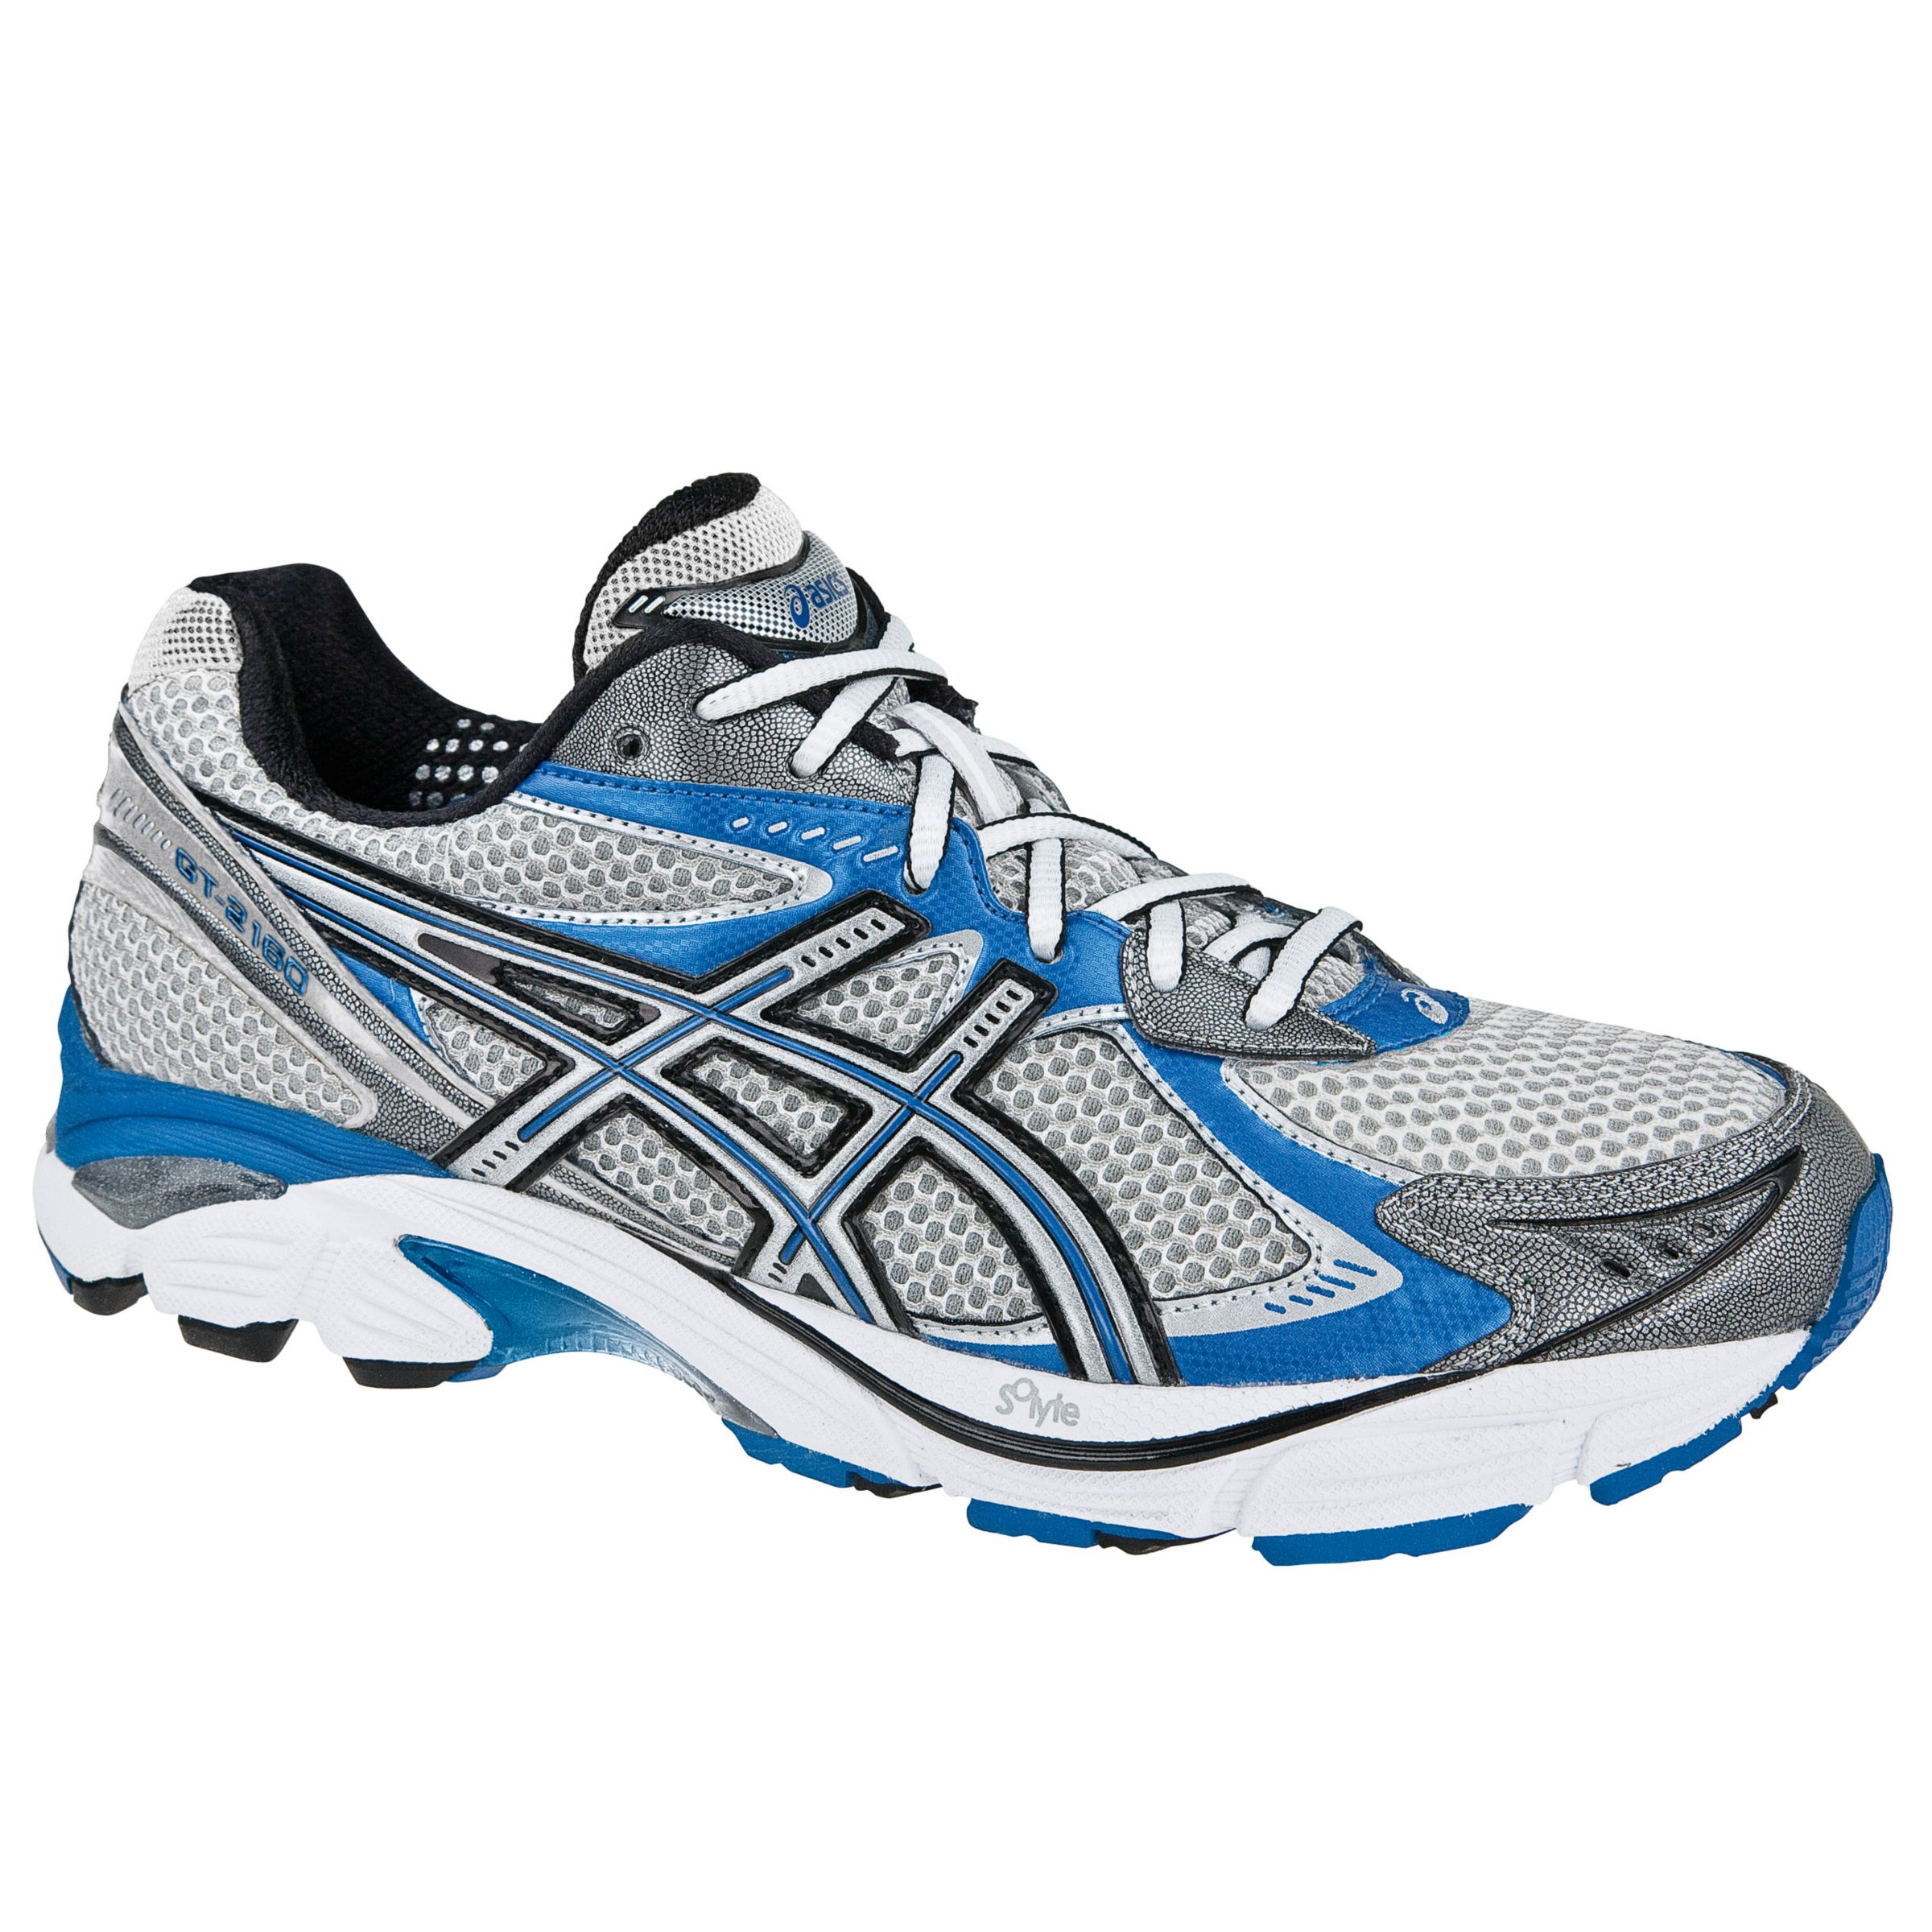 Asics GT2160 Running Shoes, Grey / Blue